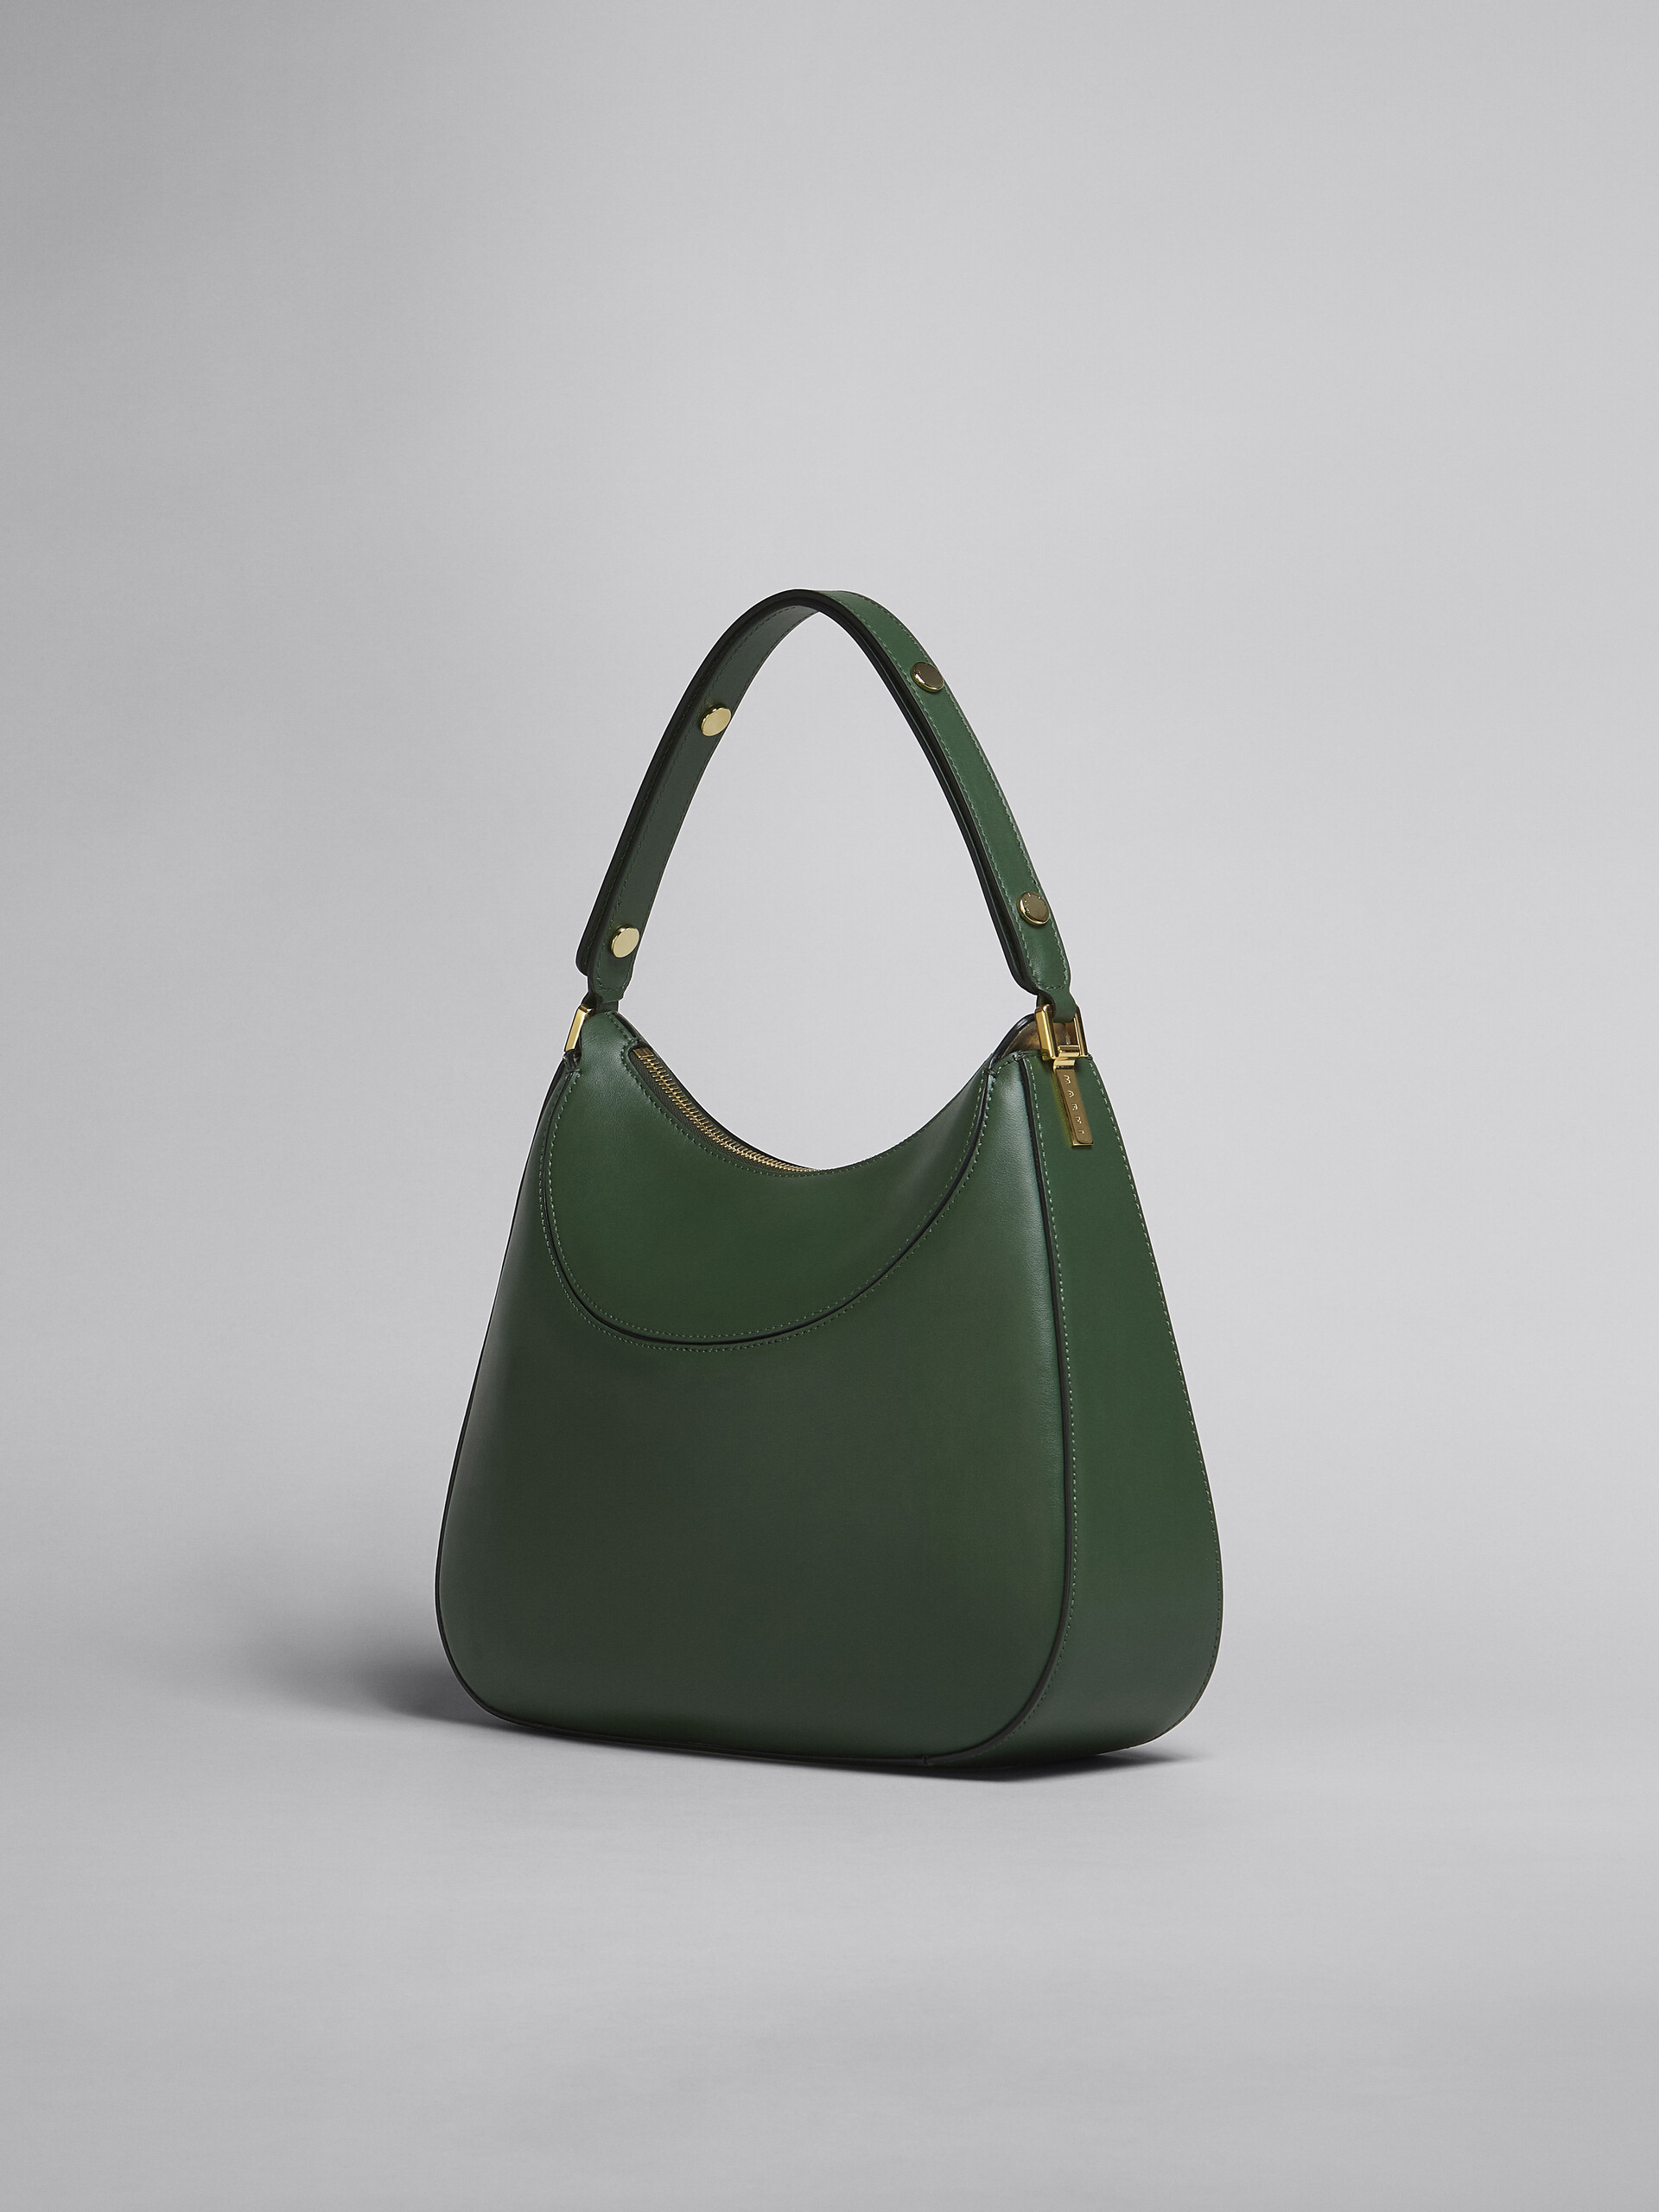 Milano bag grande in pelle verde - Borse a mano - Image 3